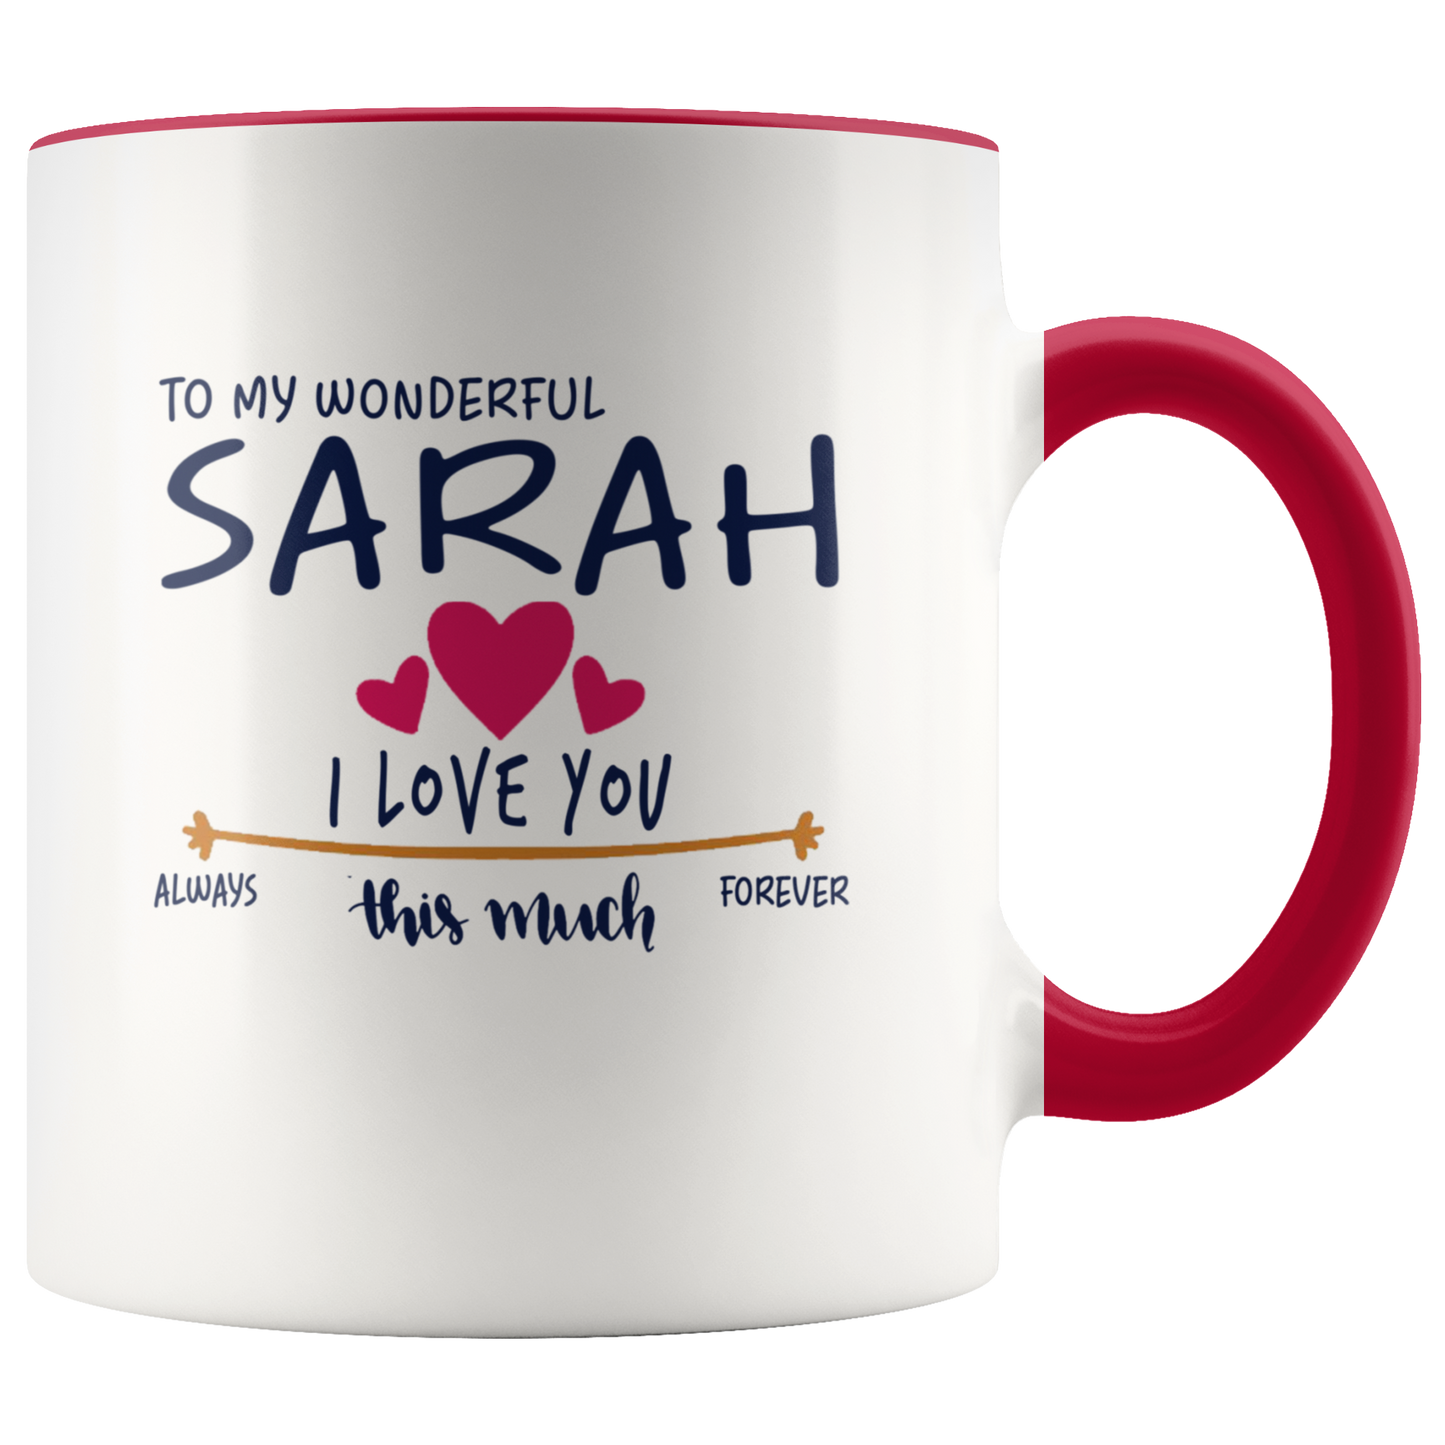 M-21258935-sp-22836 - Valentines Day Coffee Mug With Name Sarah - To My Wonderful